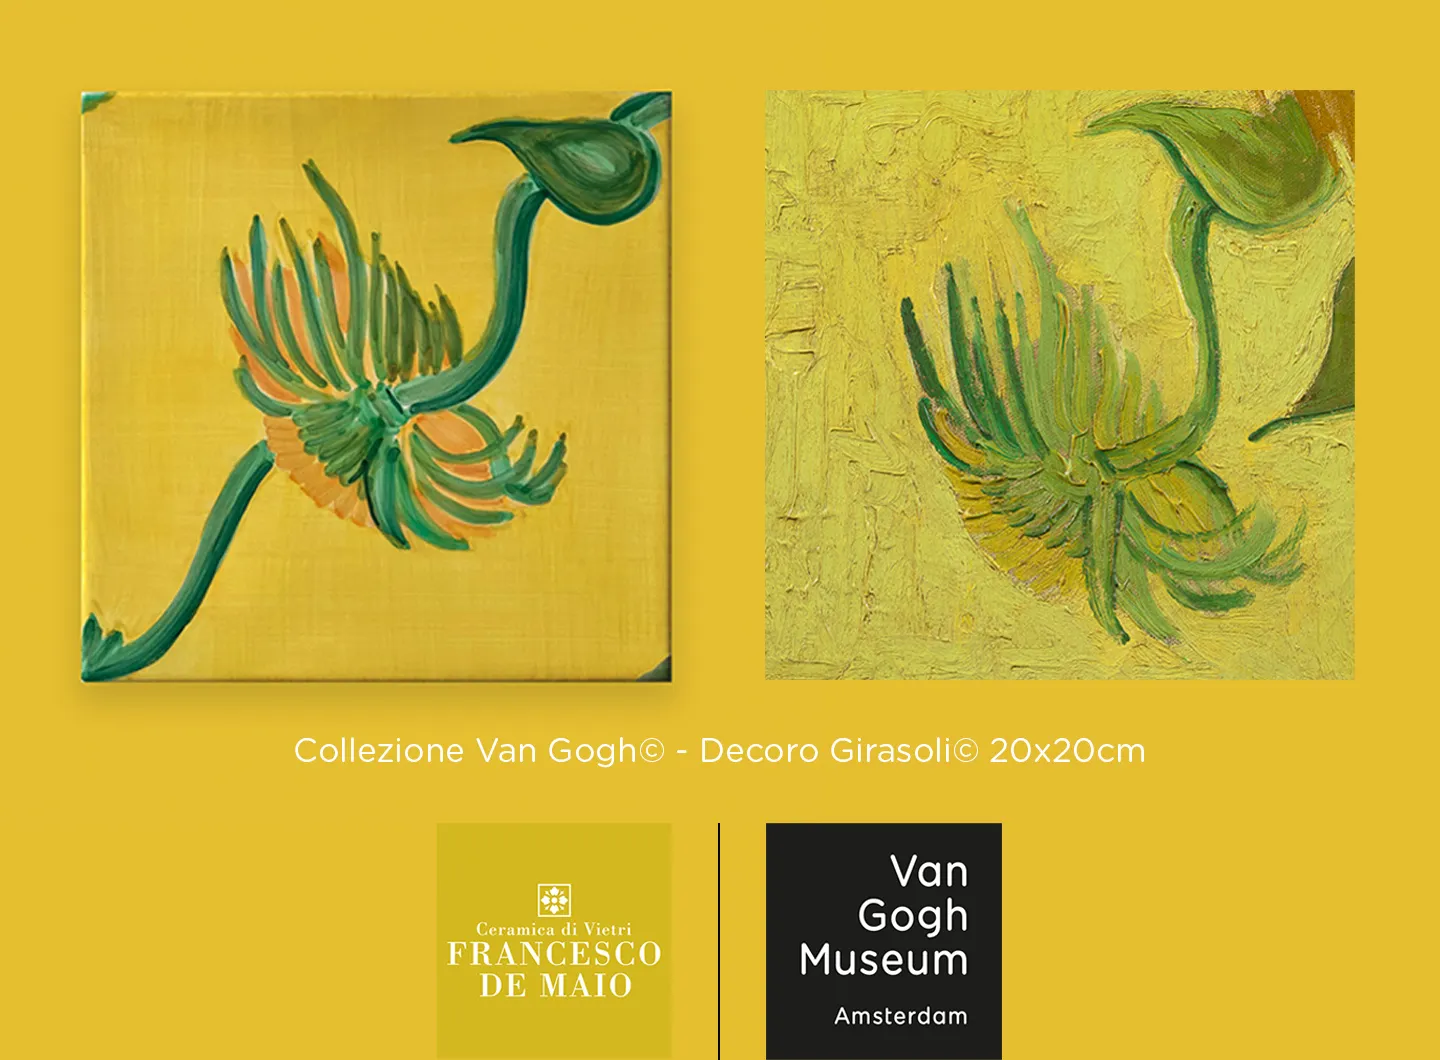 Collezione Van Gogh© di Ceramica Francesco De Maio x Van Gogh Museum® - Decoro Girasoli© 20x20cm